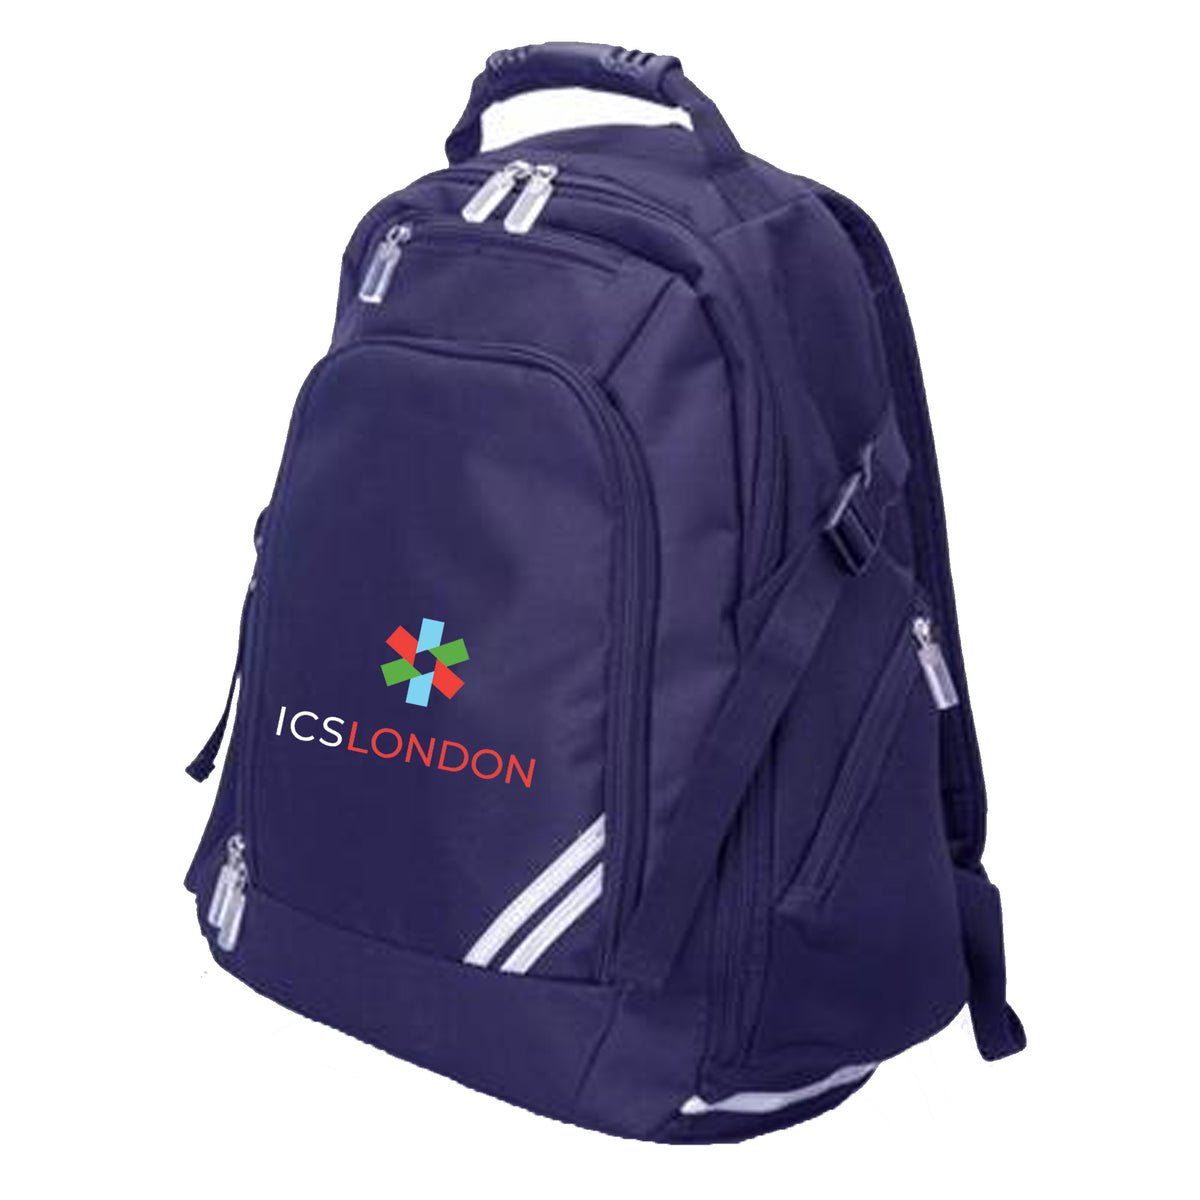 ICS London Backpack